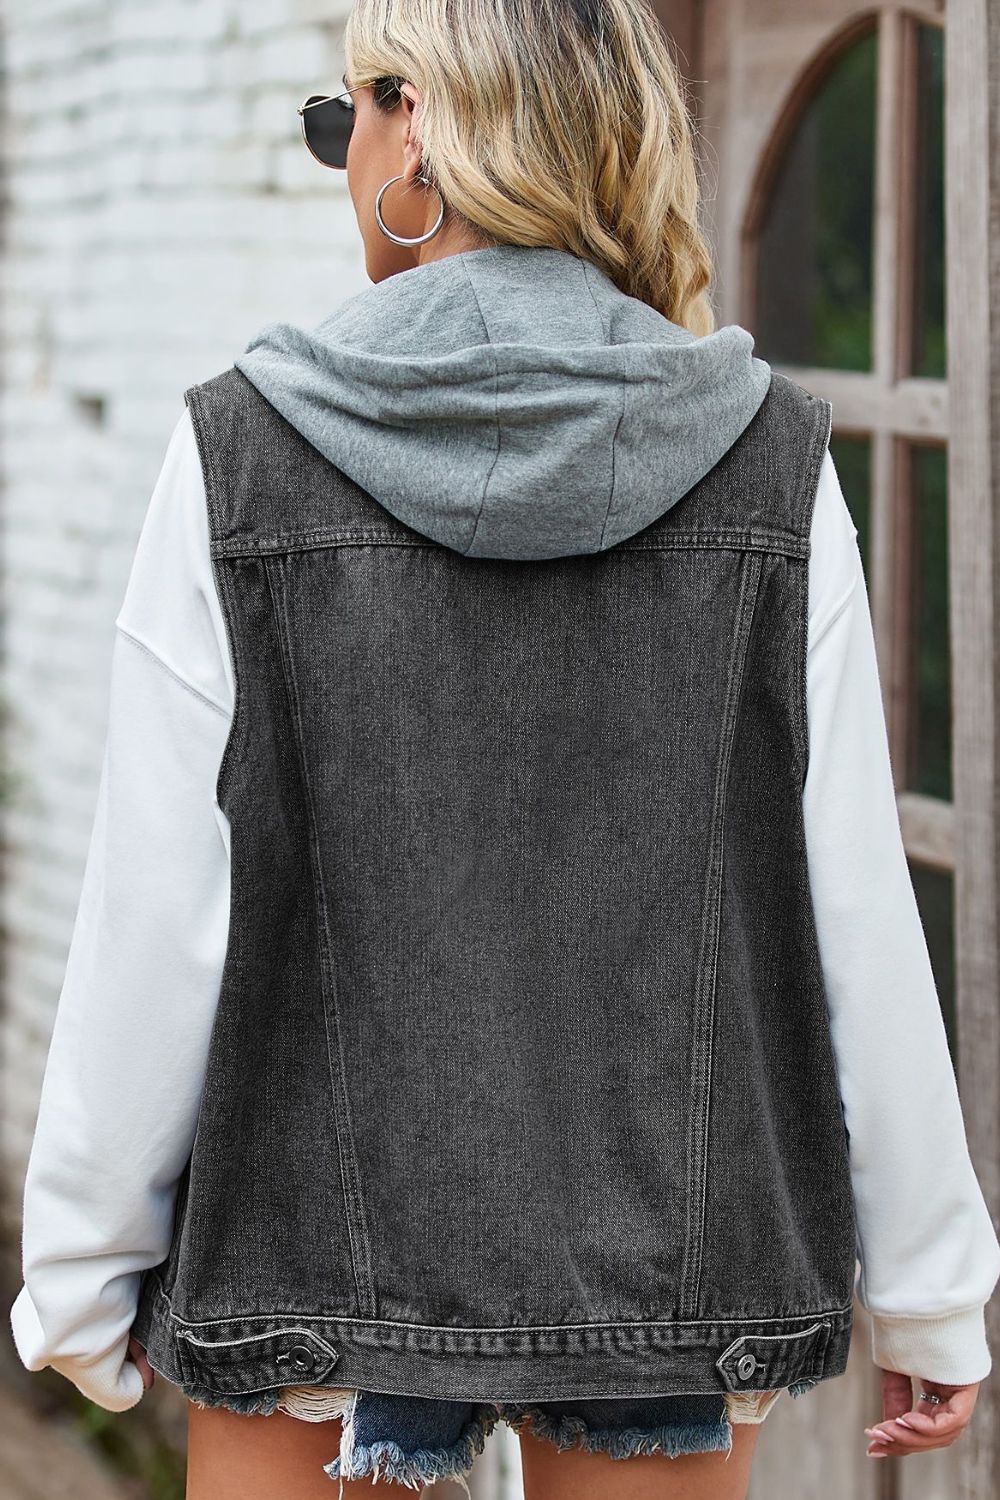 Sleeveless Denim Vest with A Detachable Hood - 2 Colors